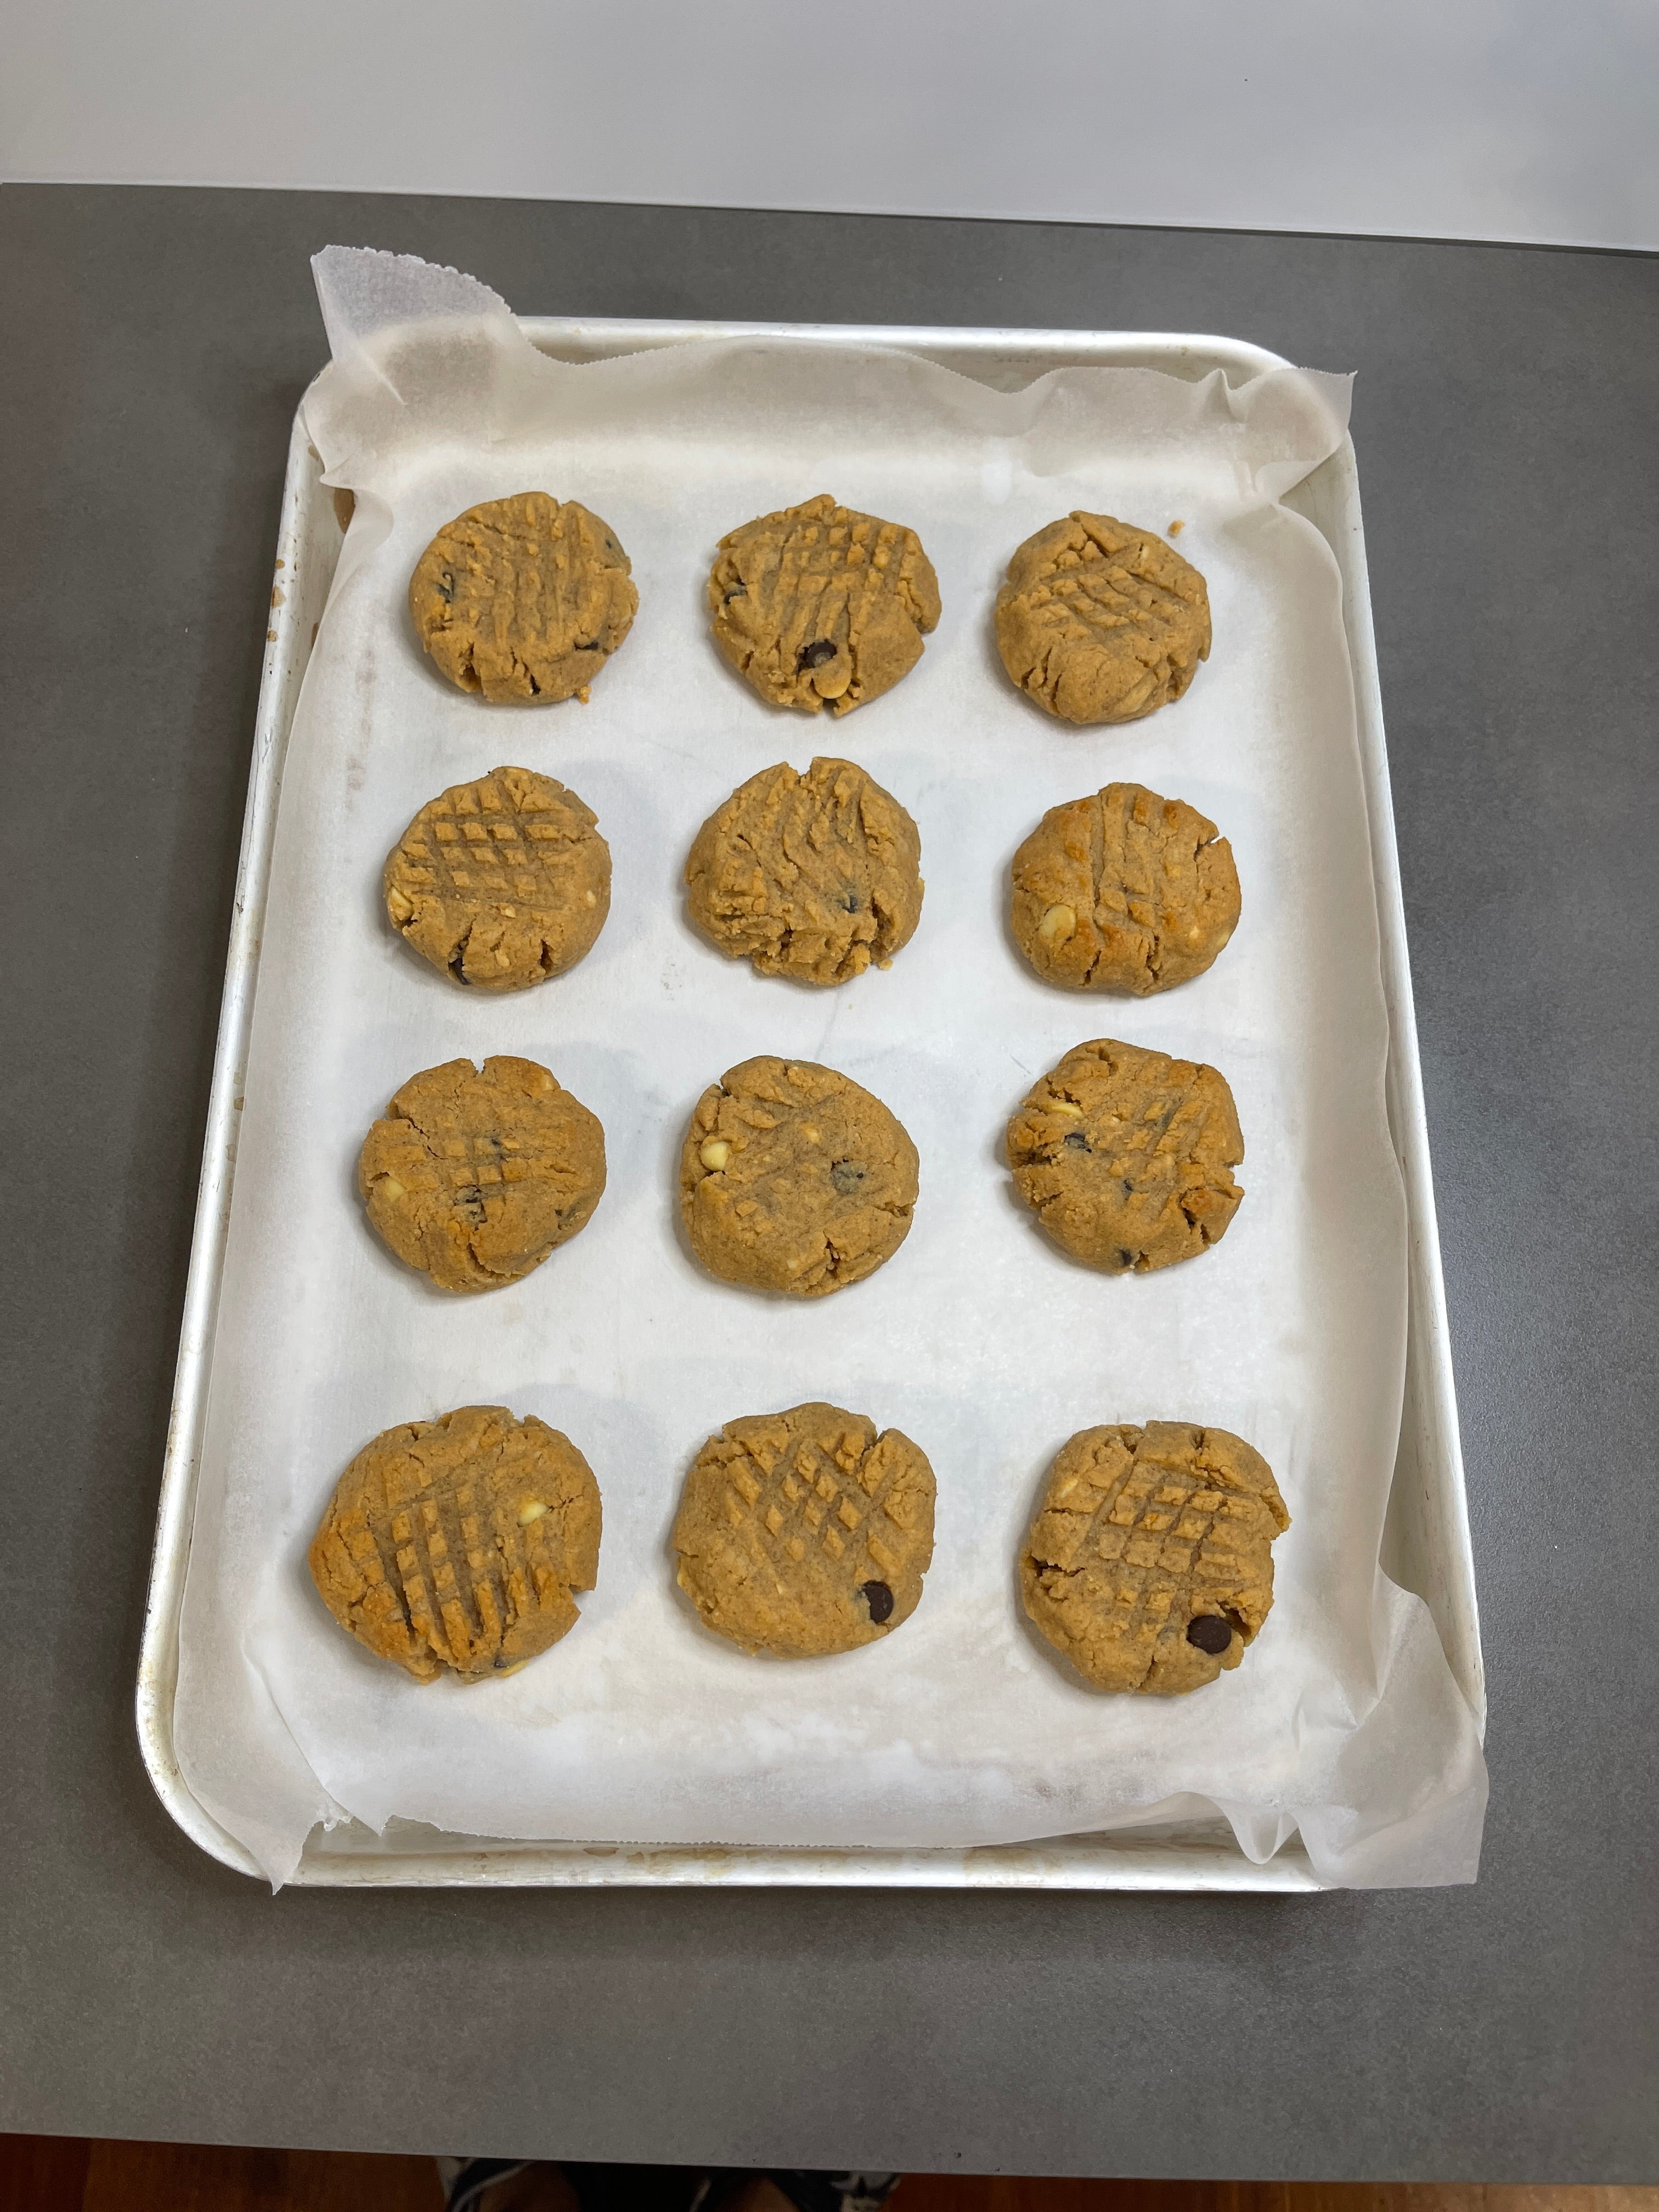 Keto Cookies - Peanut Butter Chocolate Chip Cookies